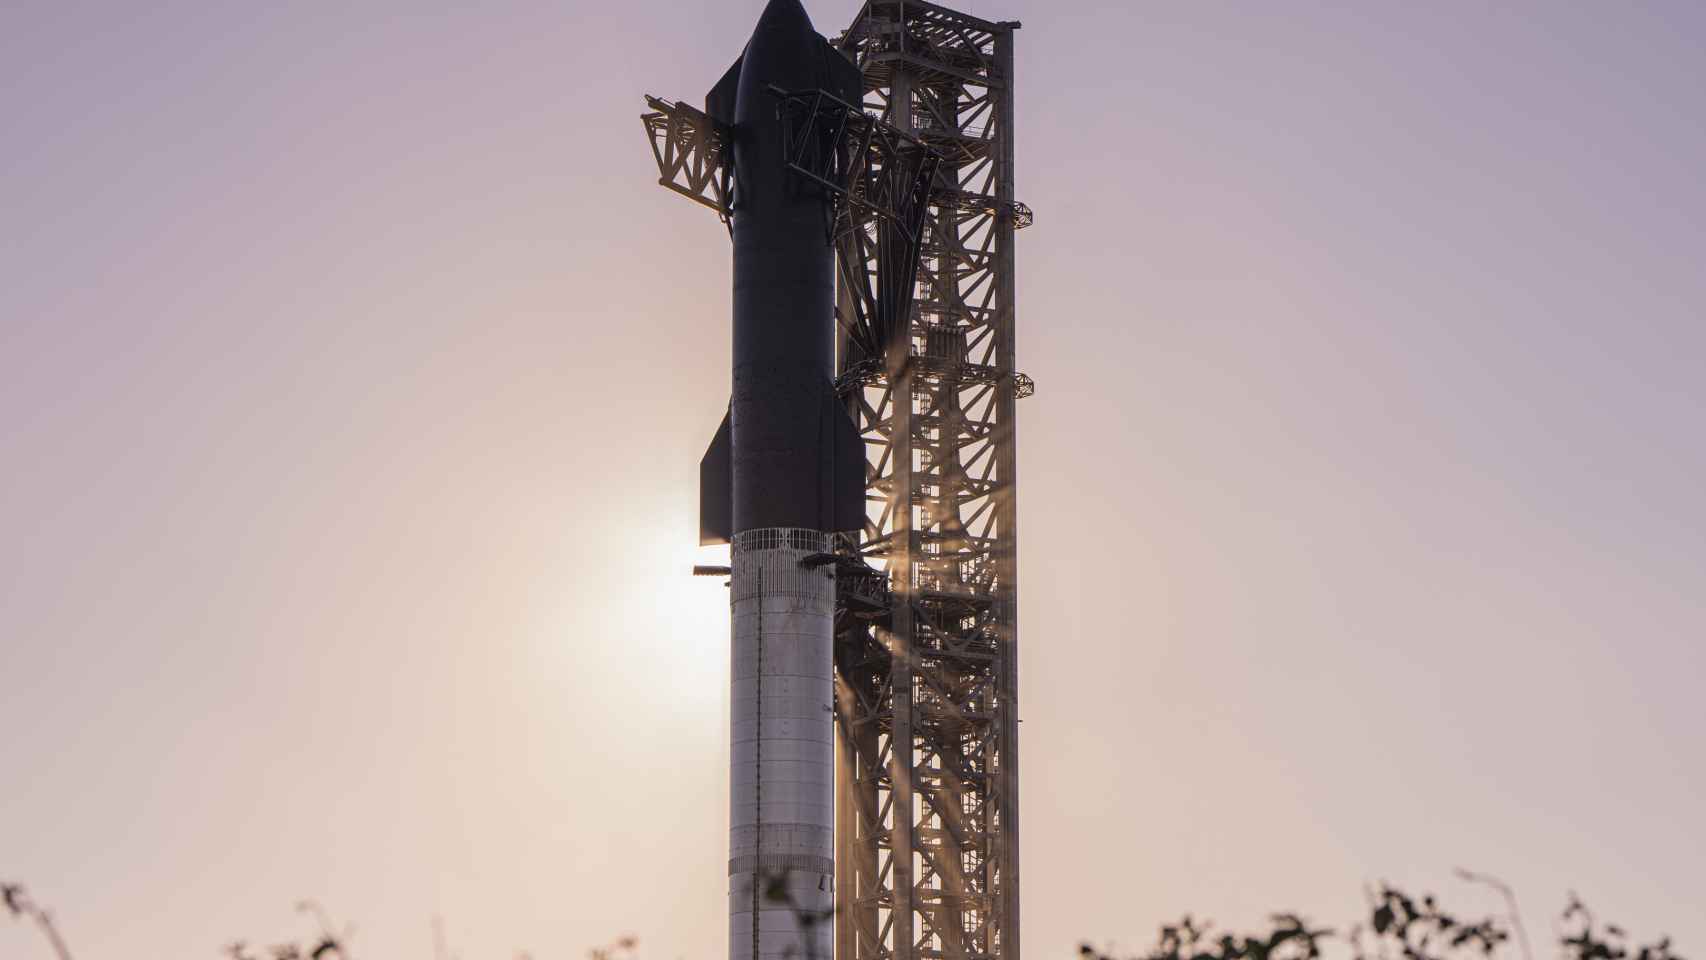 Cohete Starship de SpaceX